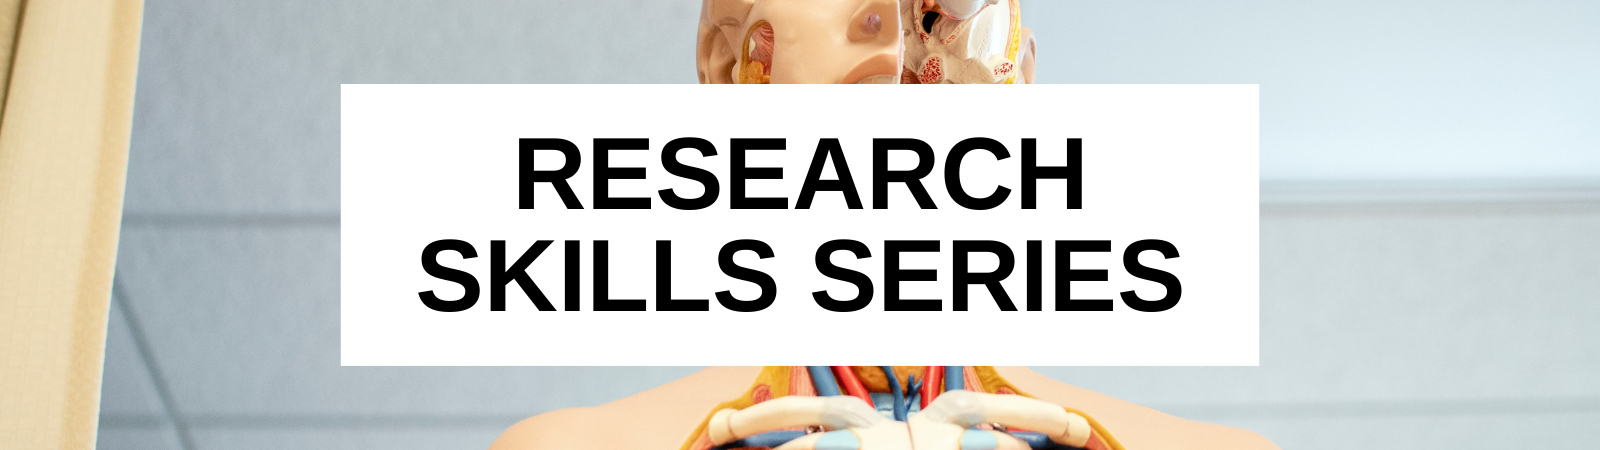 Research Skills Series